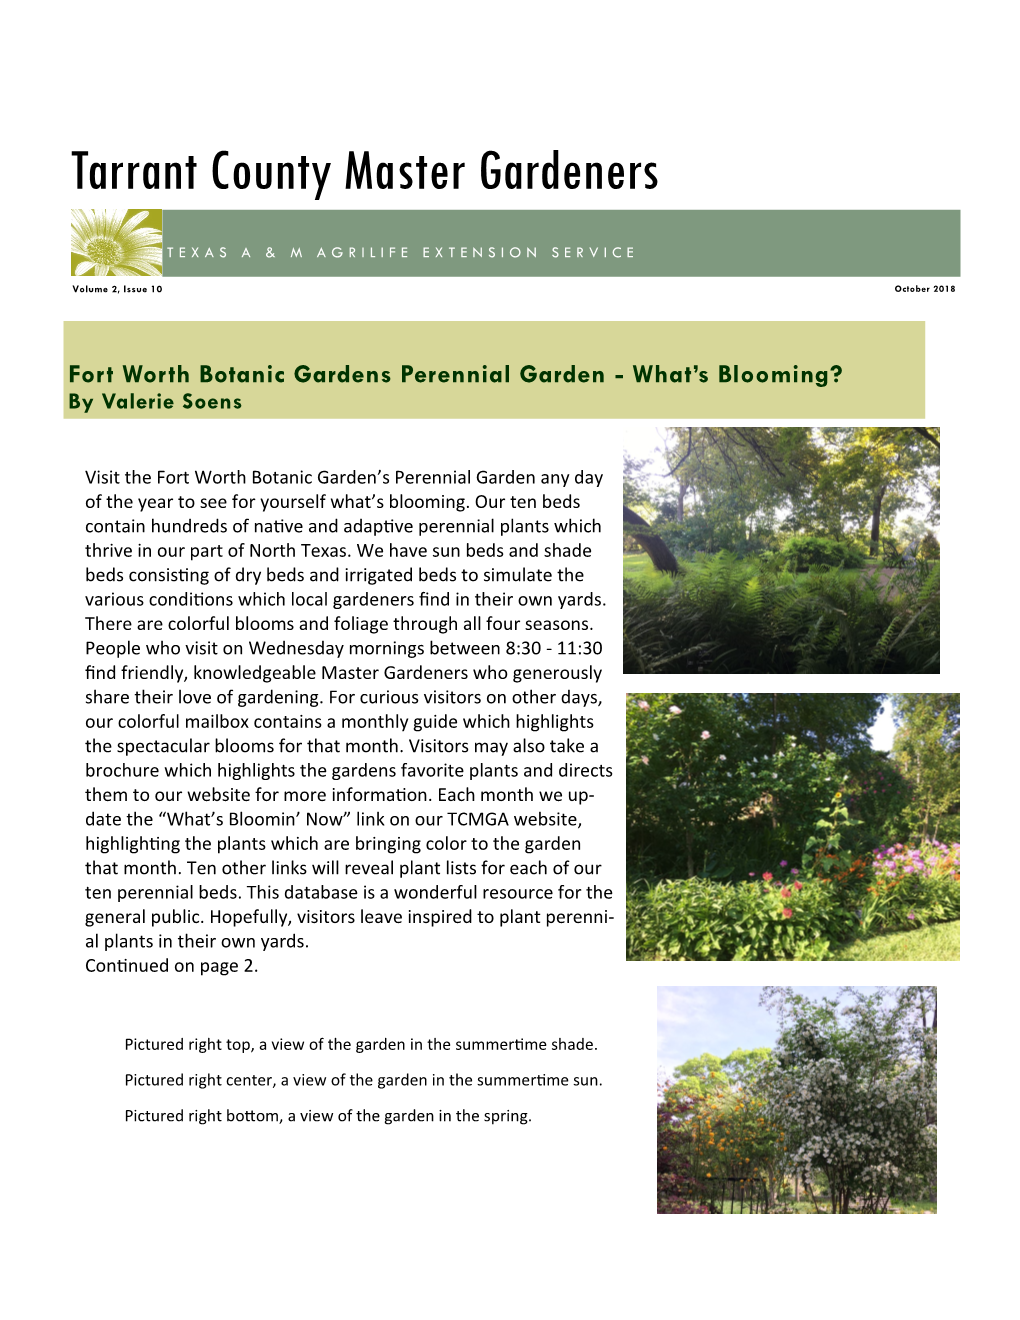 Fort Worth Botanic Gardens Perennial Garden - What’S Blooming? by Valerie Soens